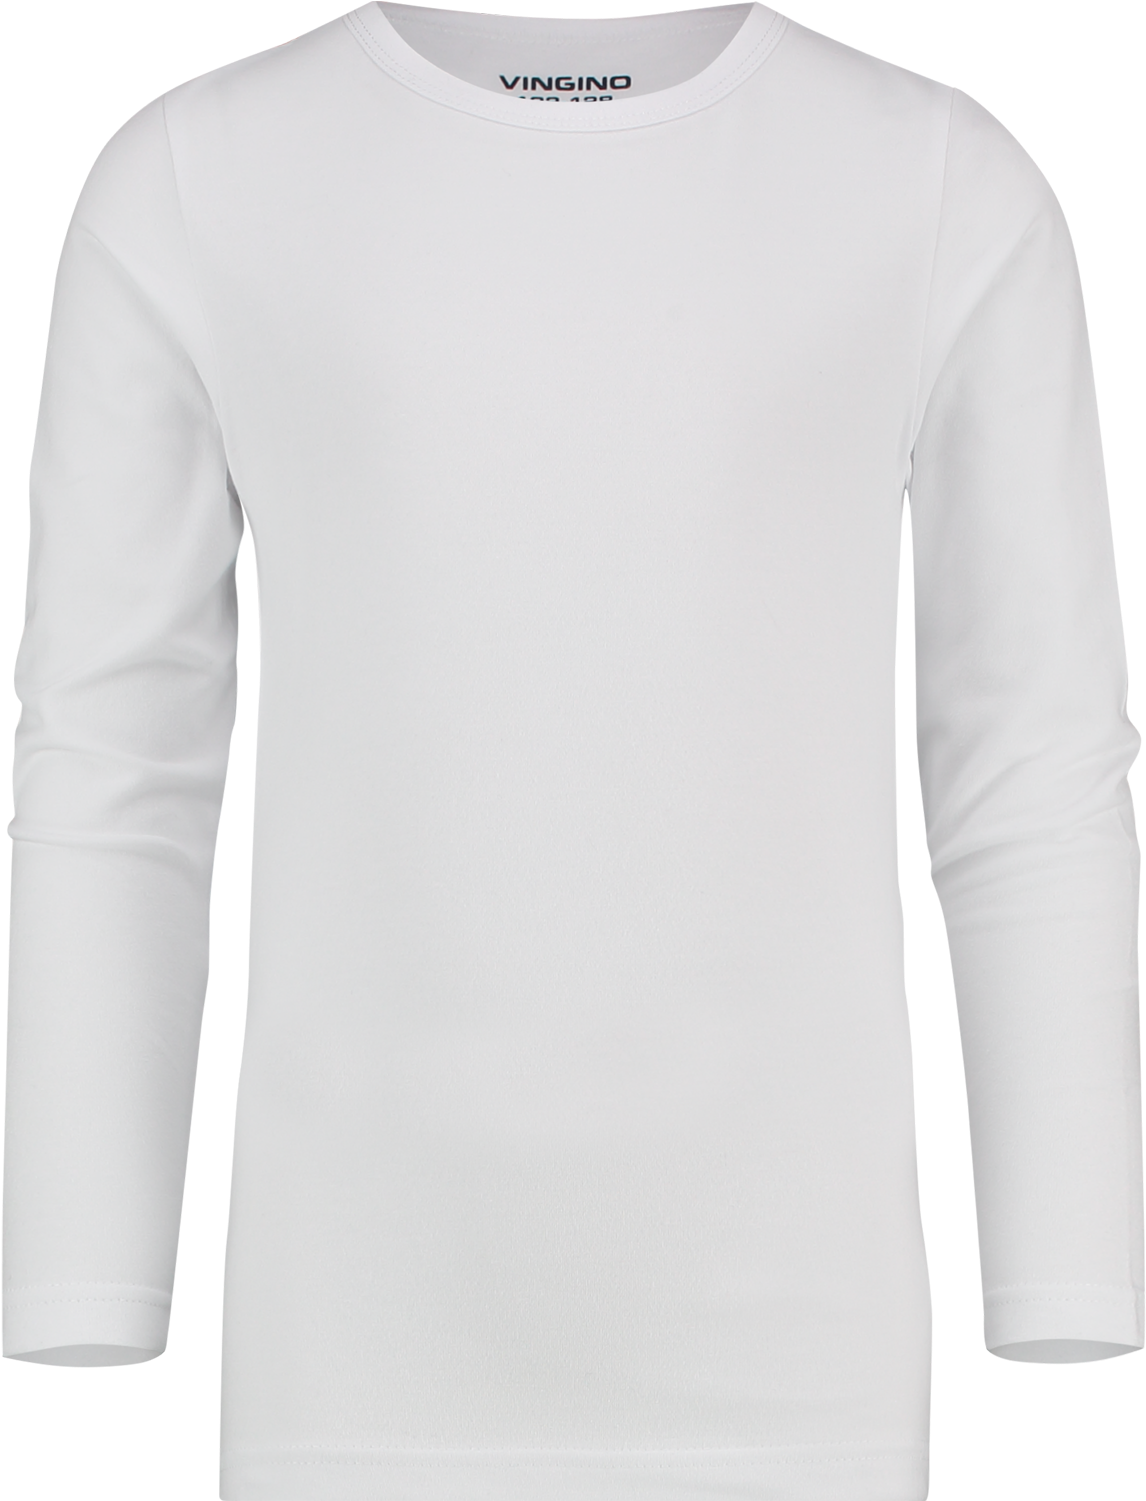 Plain White Long Sleeve Shirt PNG